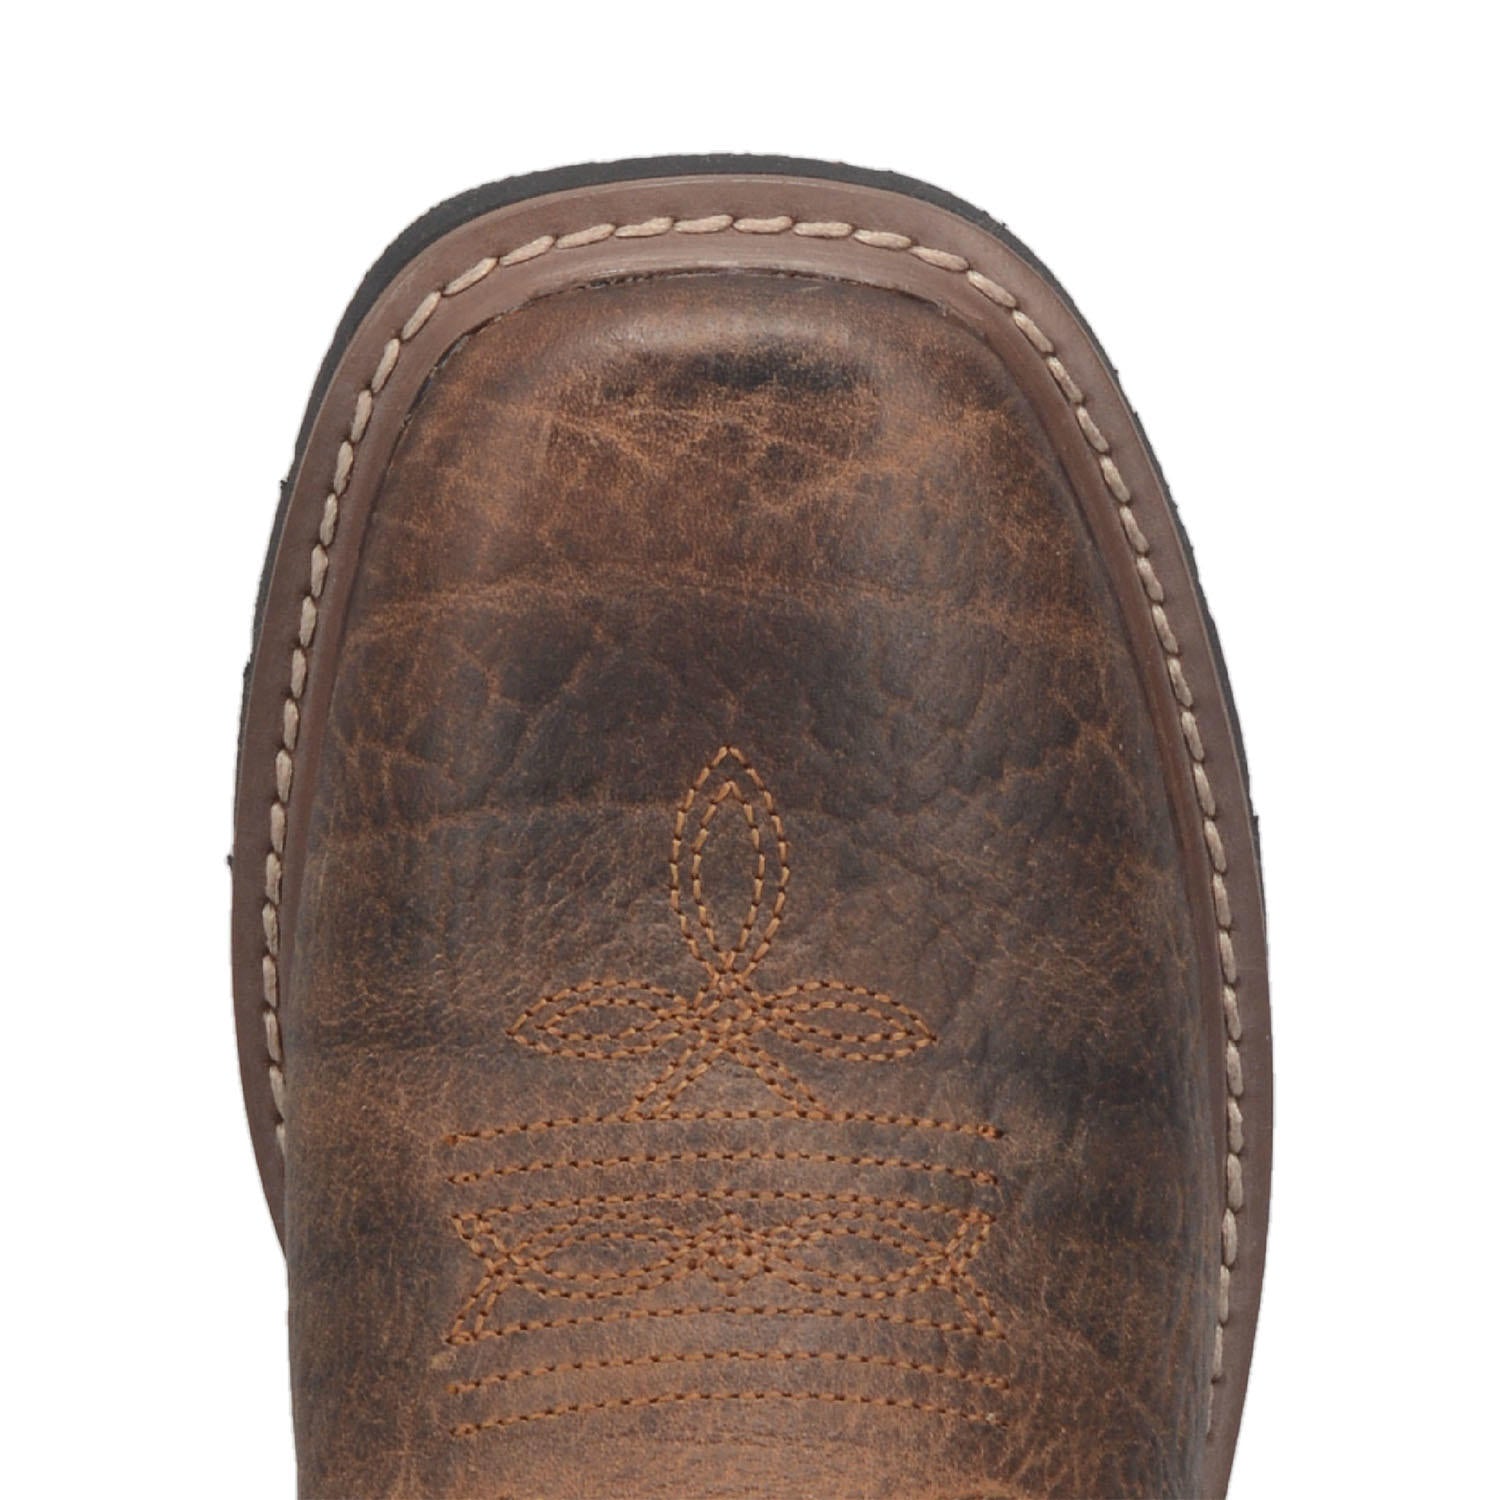 Kid's Dan Post Brantley Leather Boots Handcrafted Brown - yeehawcowboy